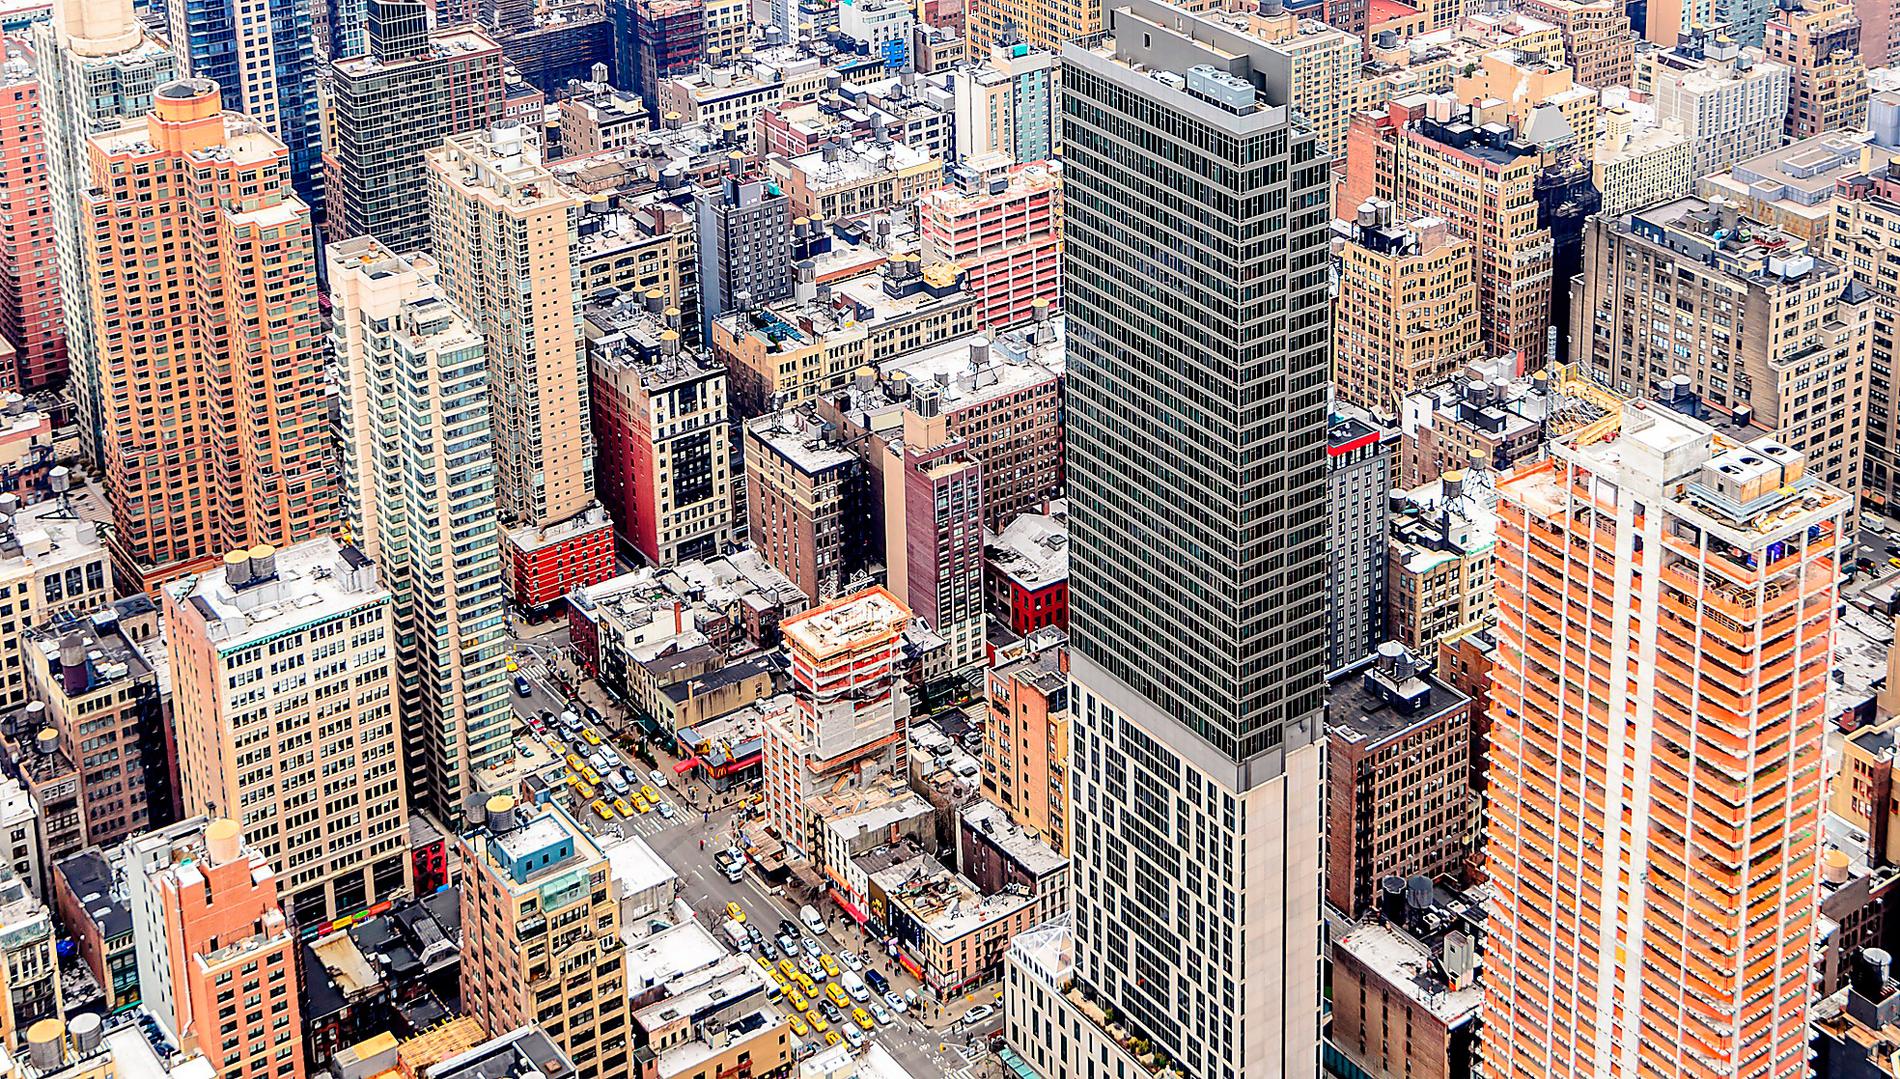 Downtown, New York, en stad i förfall enligt Thomas Pynchon. Foto: Raghu Ramaswamy